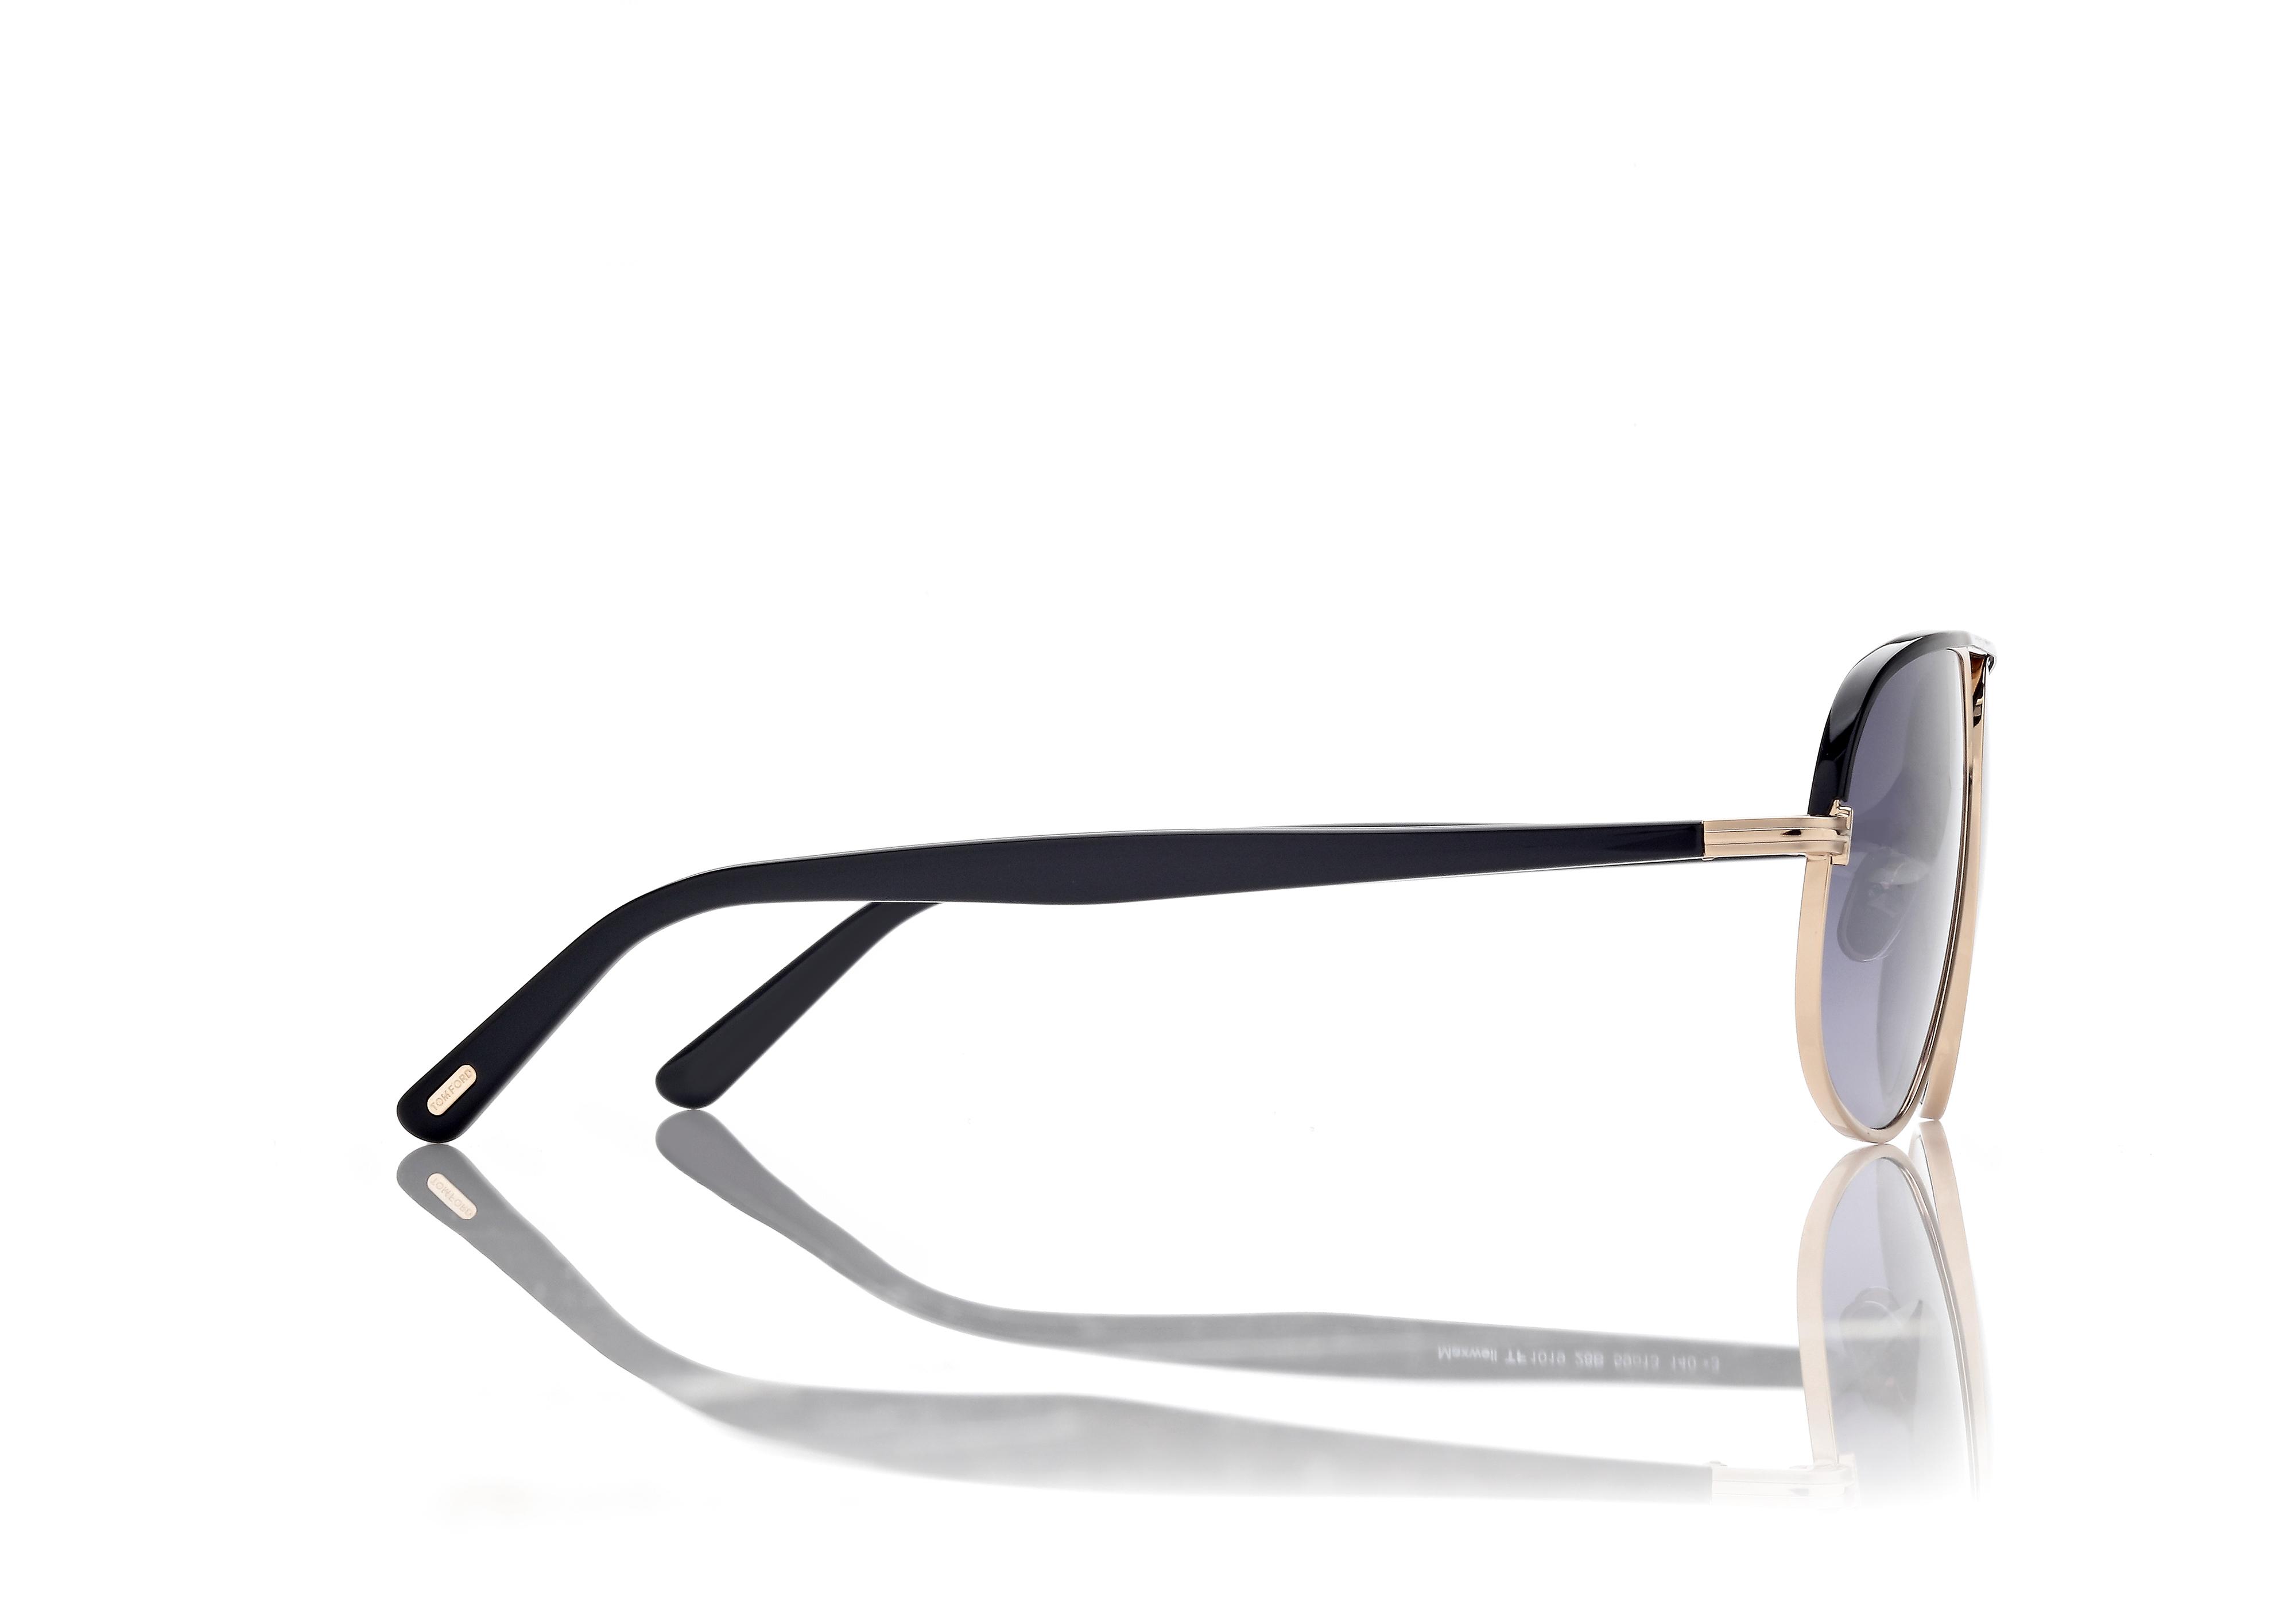 Tom Ford Men's Maxwell Double-Bridge Aviator Sunglasses